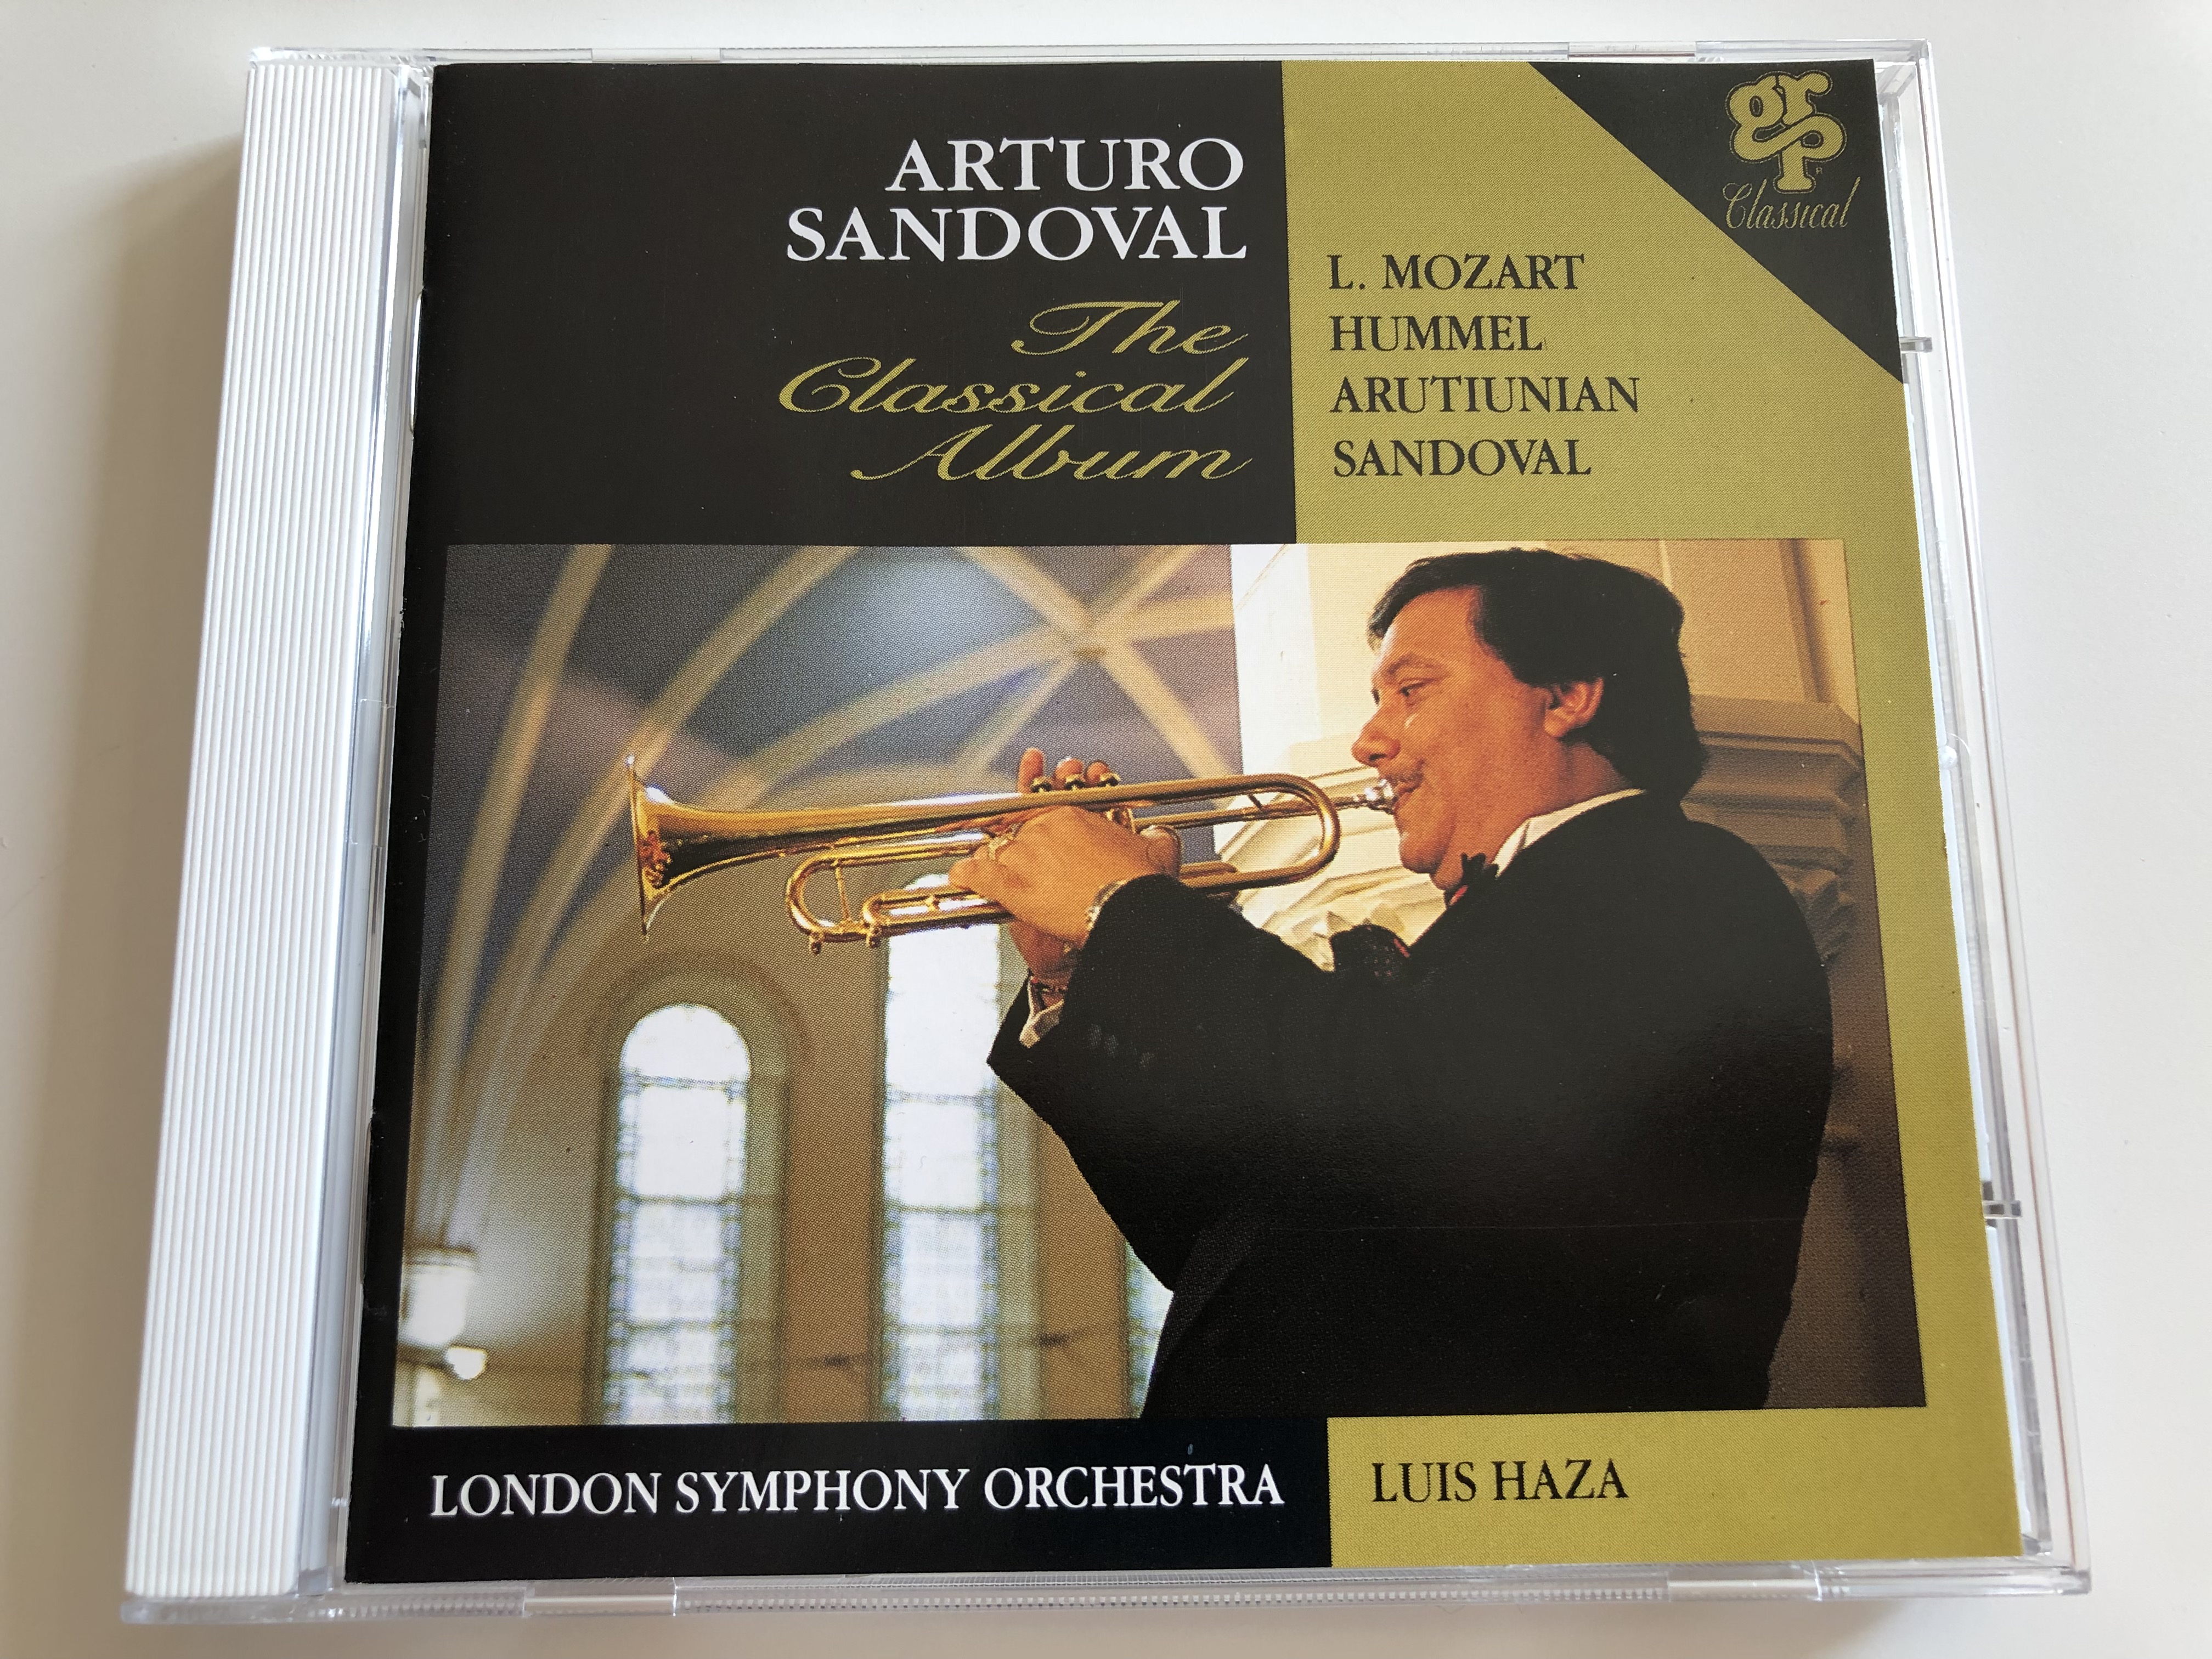 arturo-sandoval-the-classical-album-l.-mozart-hummel-arutiunian-sandoval-london-symphony-orchestra-luis-haza-grp-audio-cd-1994-grk-75002-1-.jpg